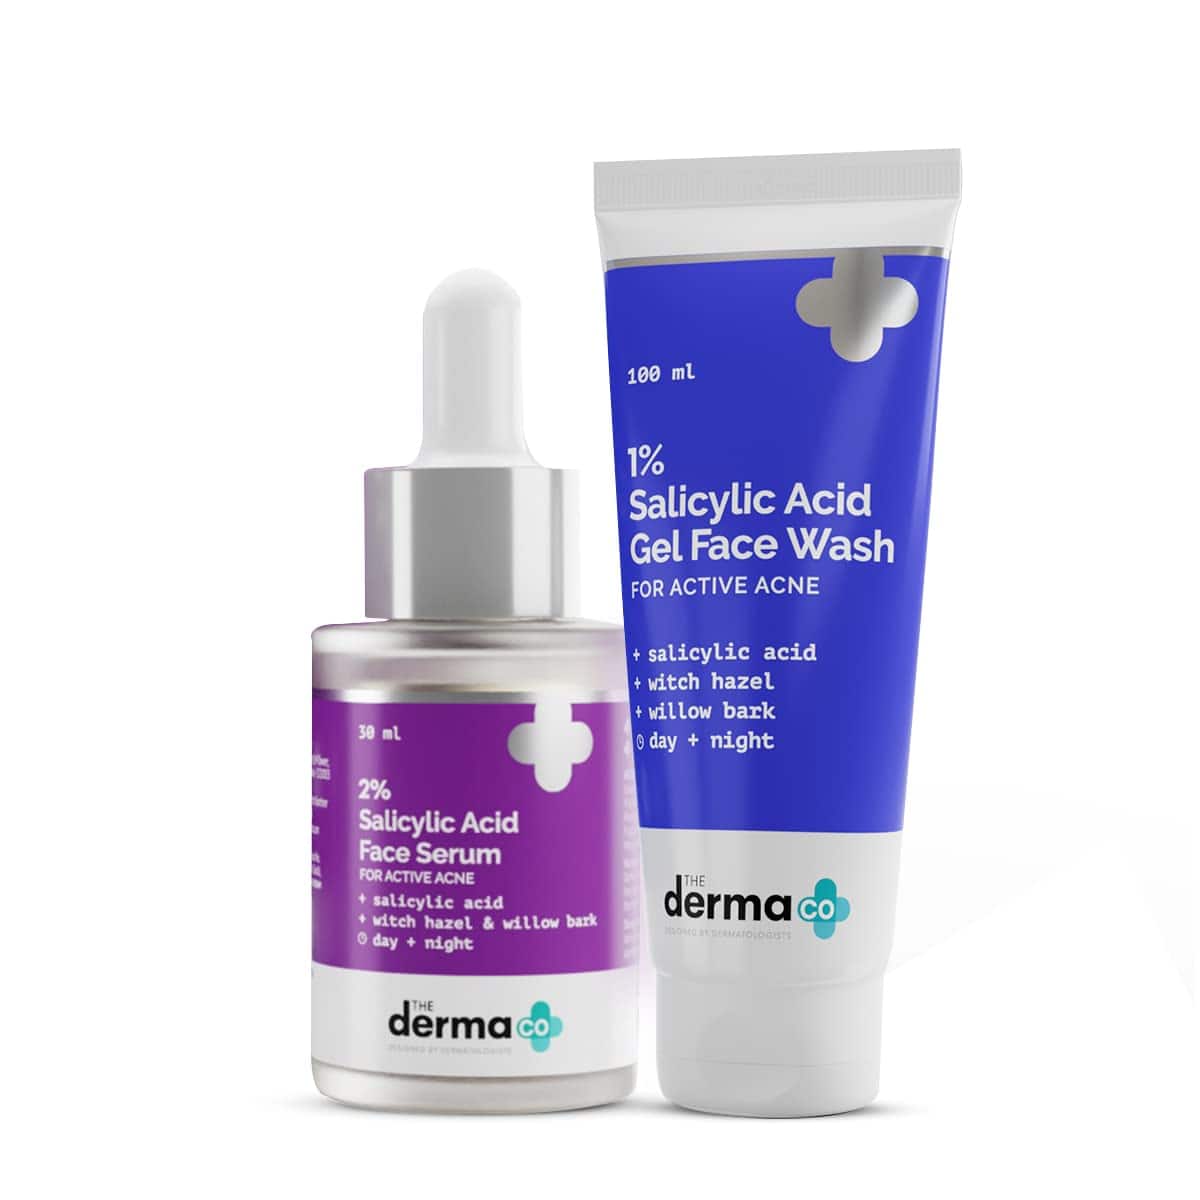 The Derma Co Anti-Acne Regimen Combo